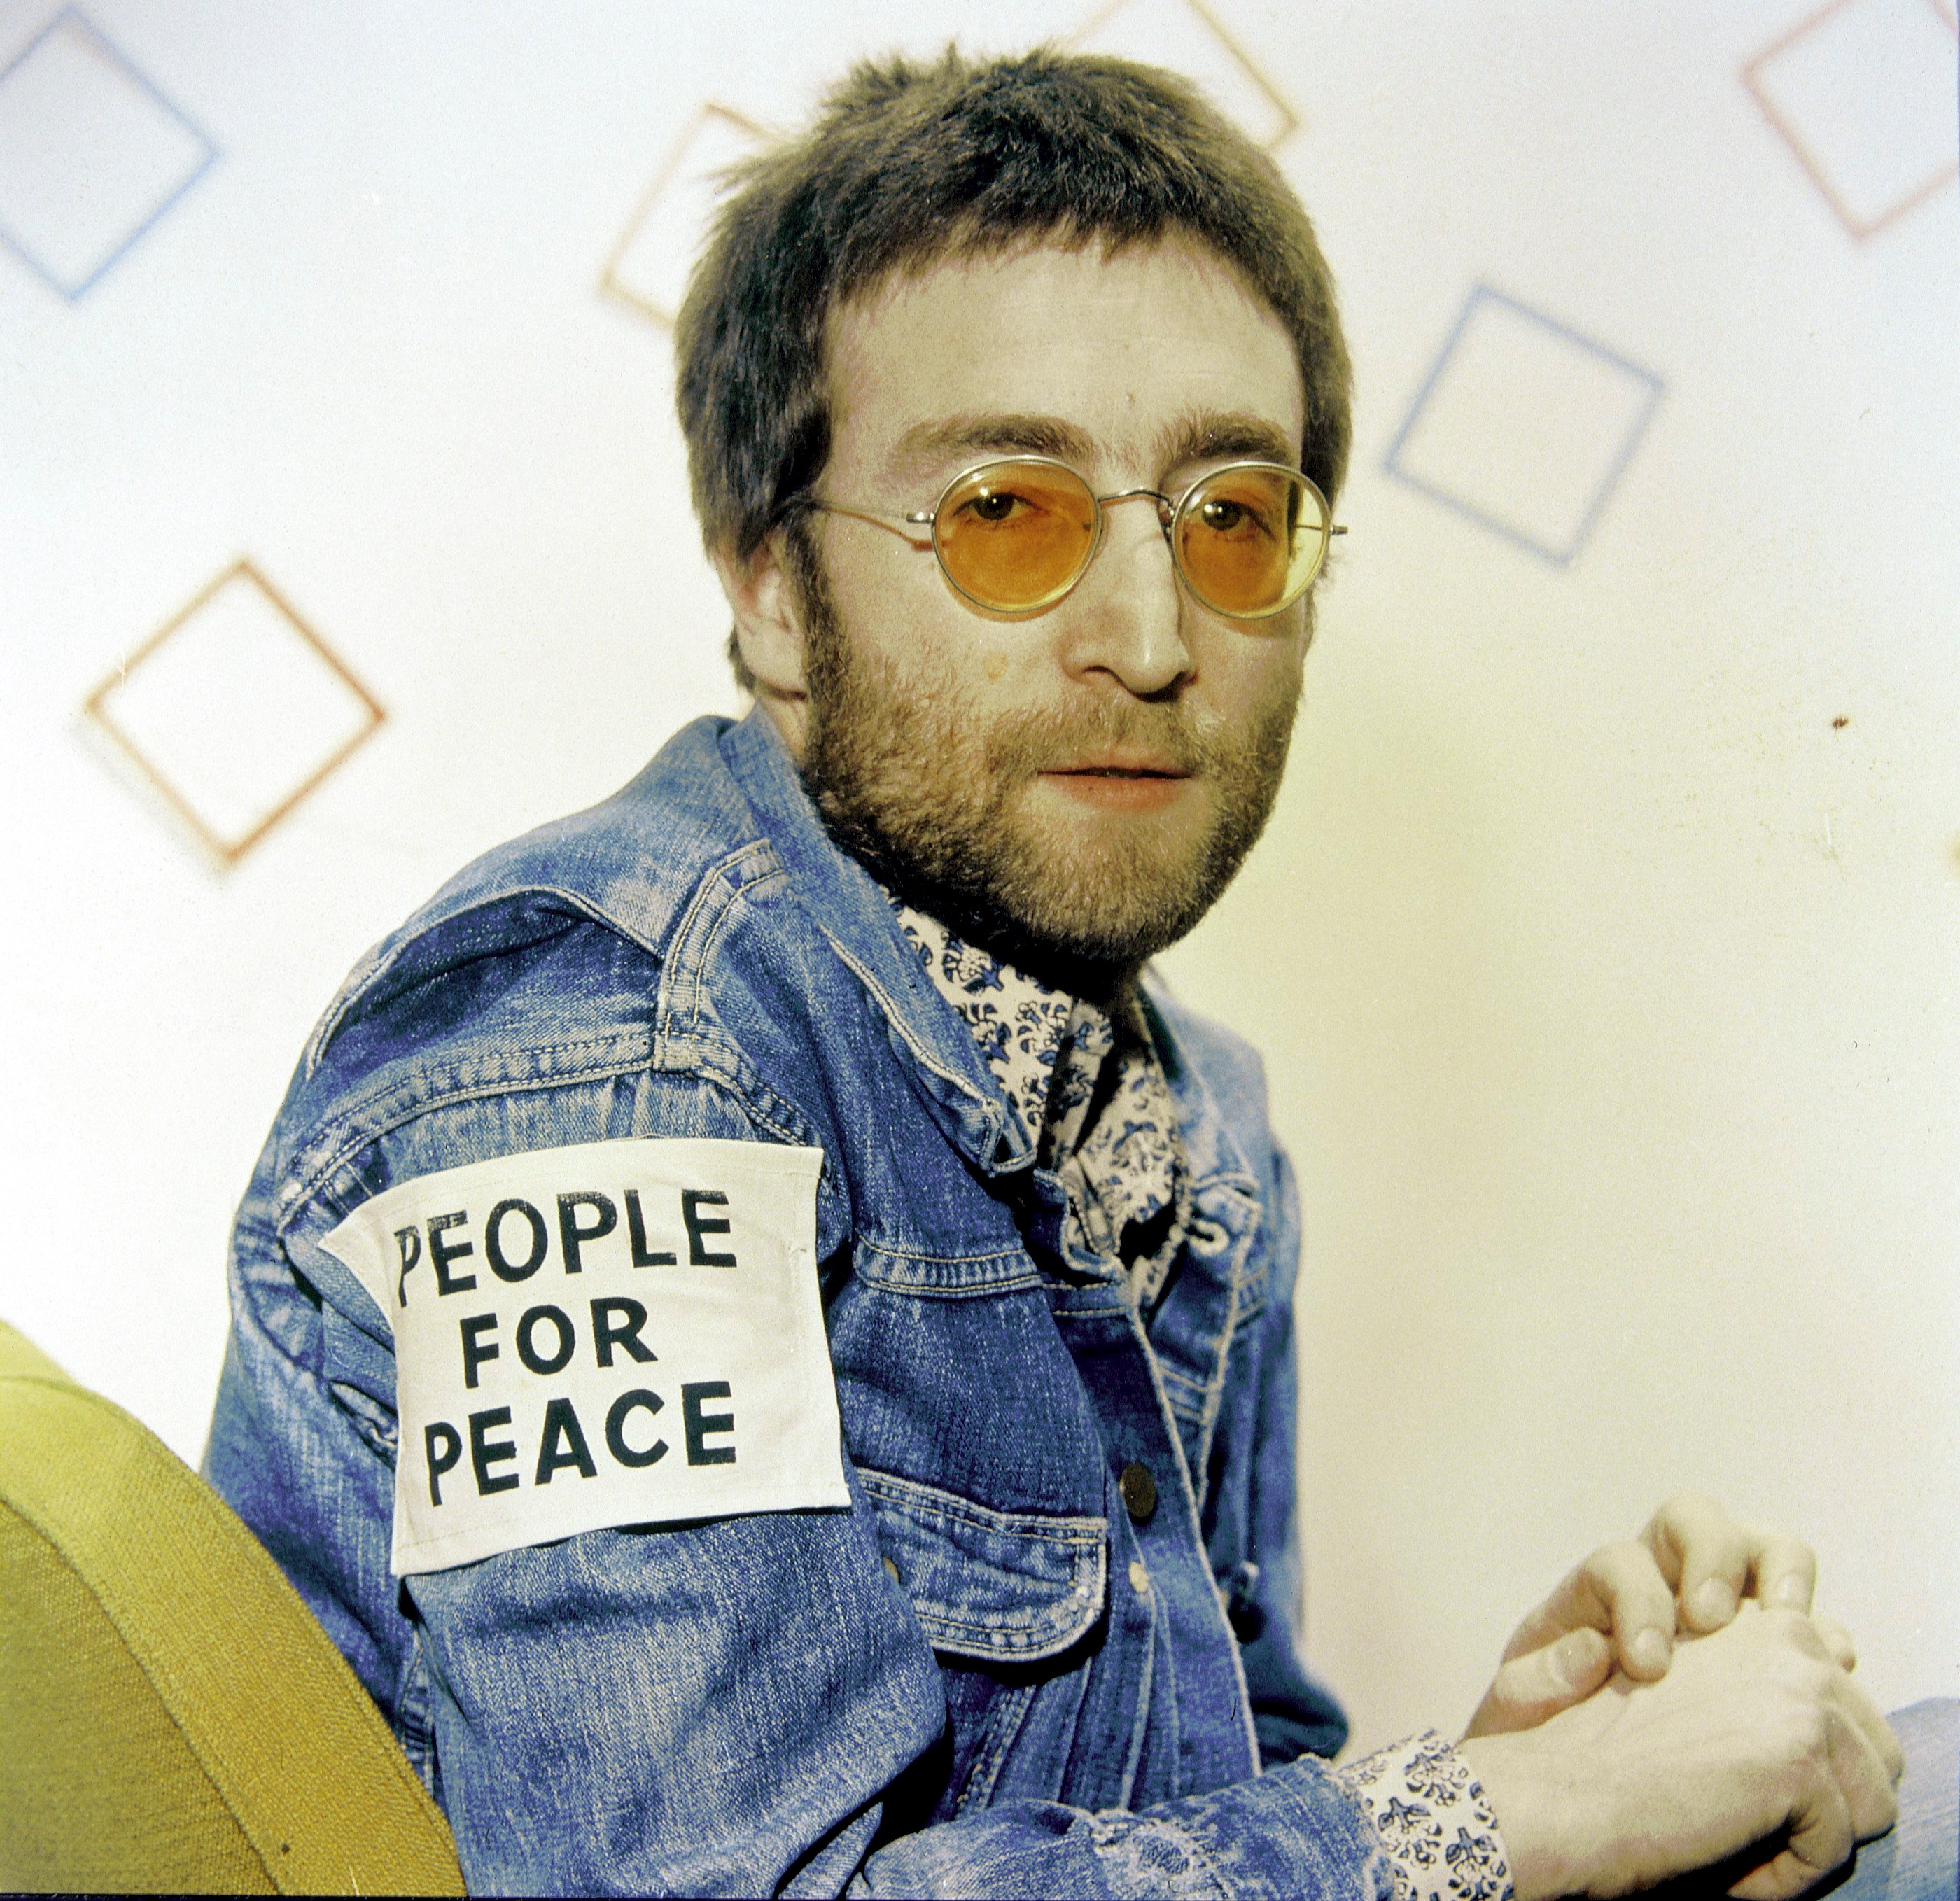 "Give Peace a Chance" singer John Lennon wearing a jean jacket